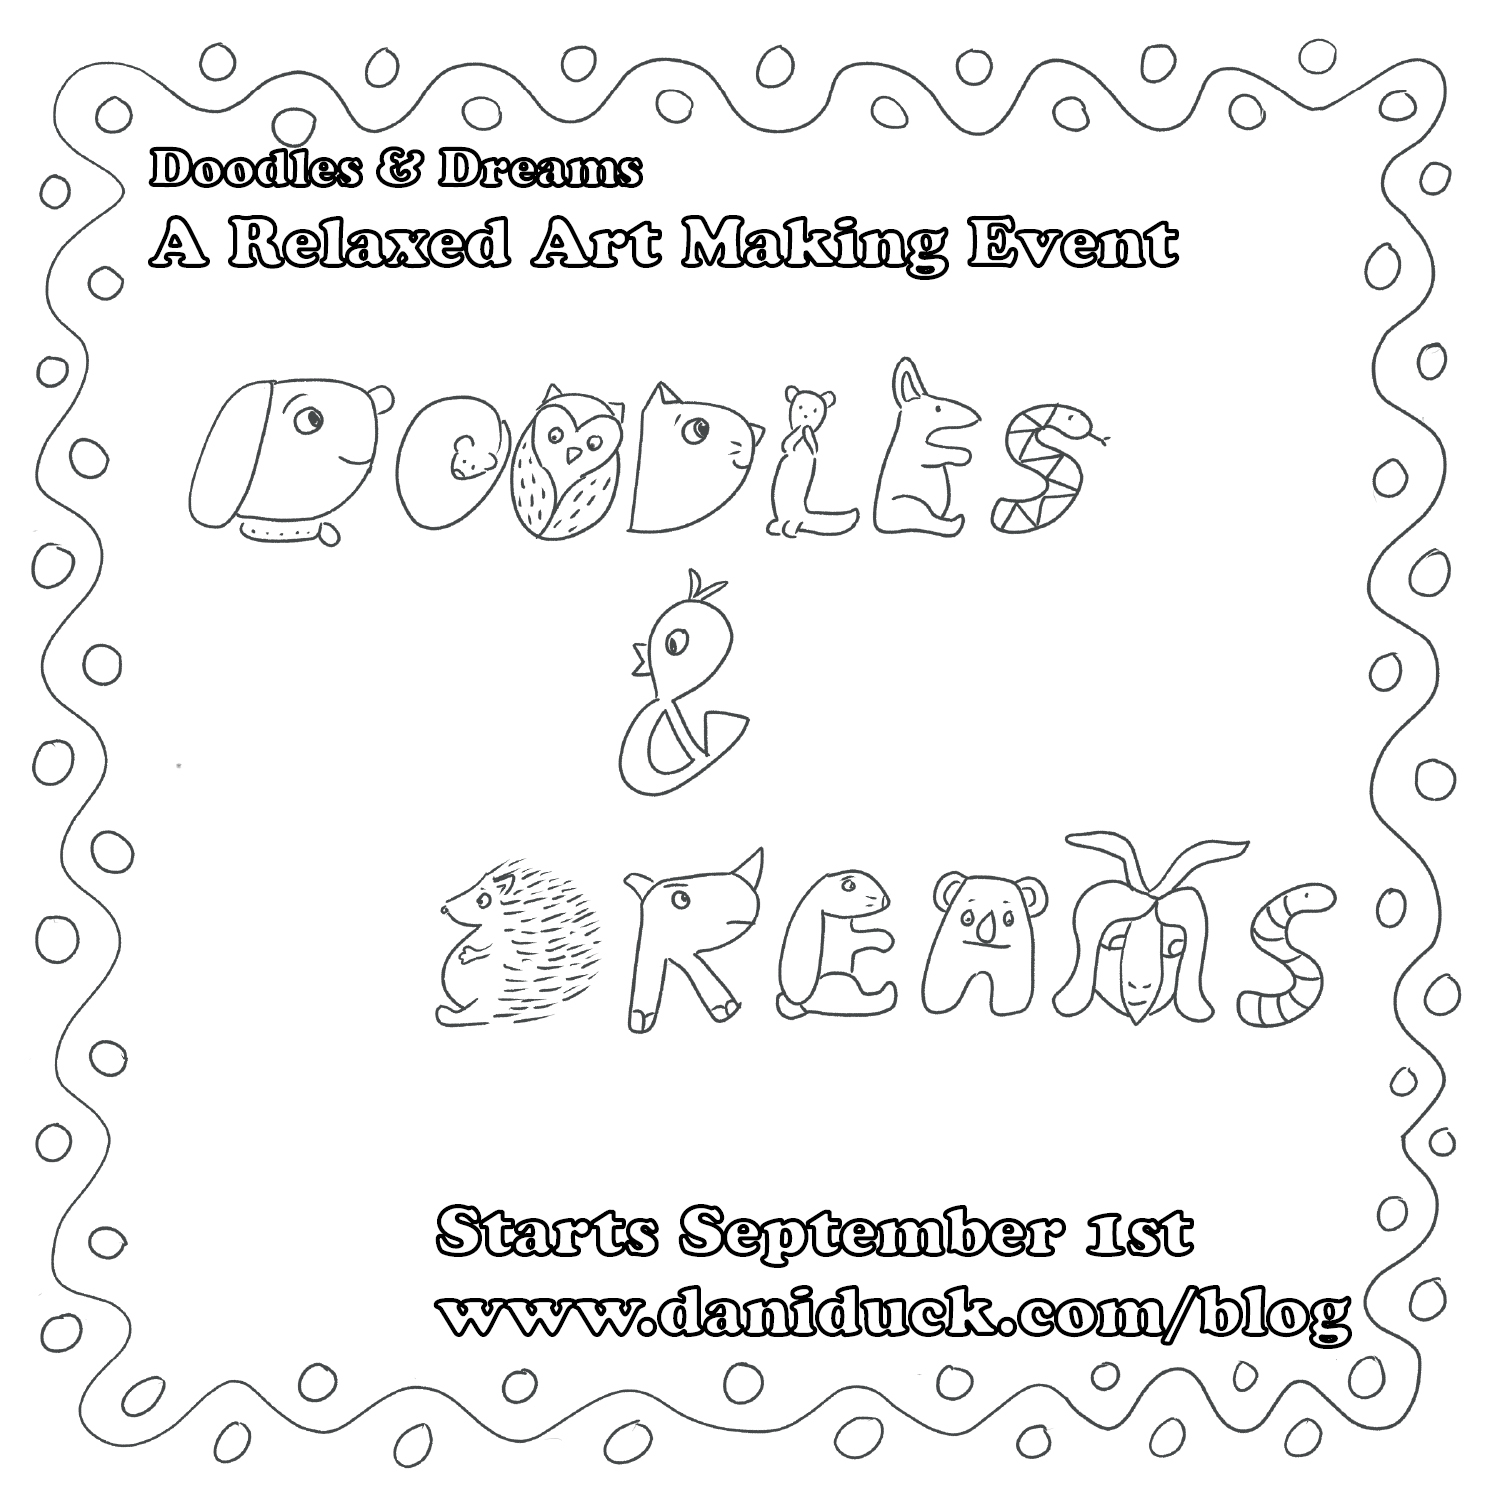 DREAMS AND DOODLESad small